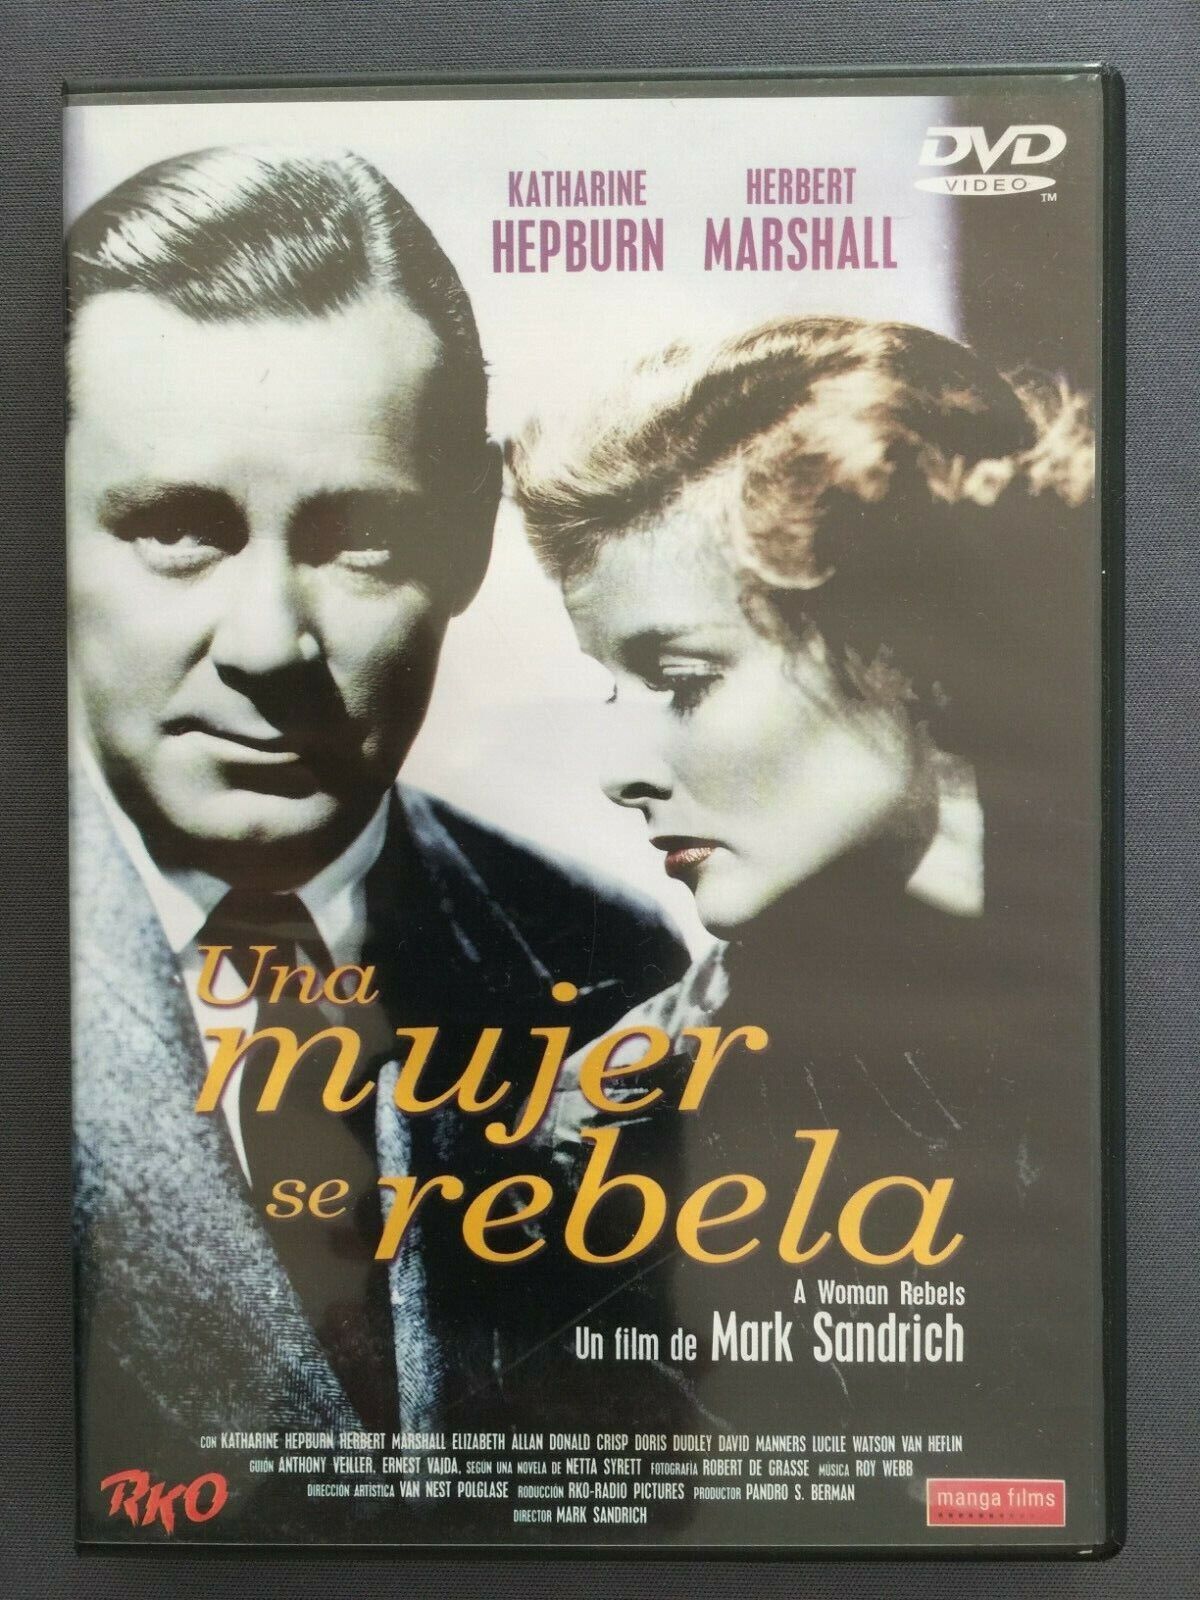 DVD UNA MUJER SE REBELA Katharine Hepburn Herbert Marshall MARK SANDRICH